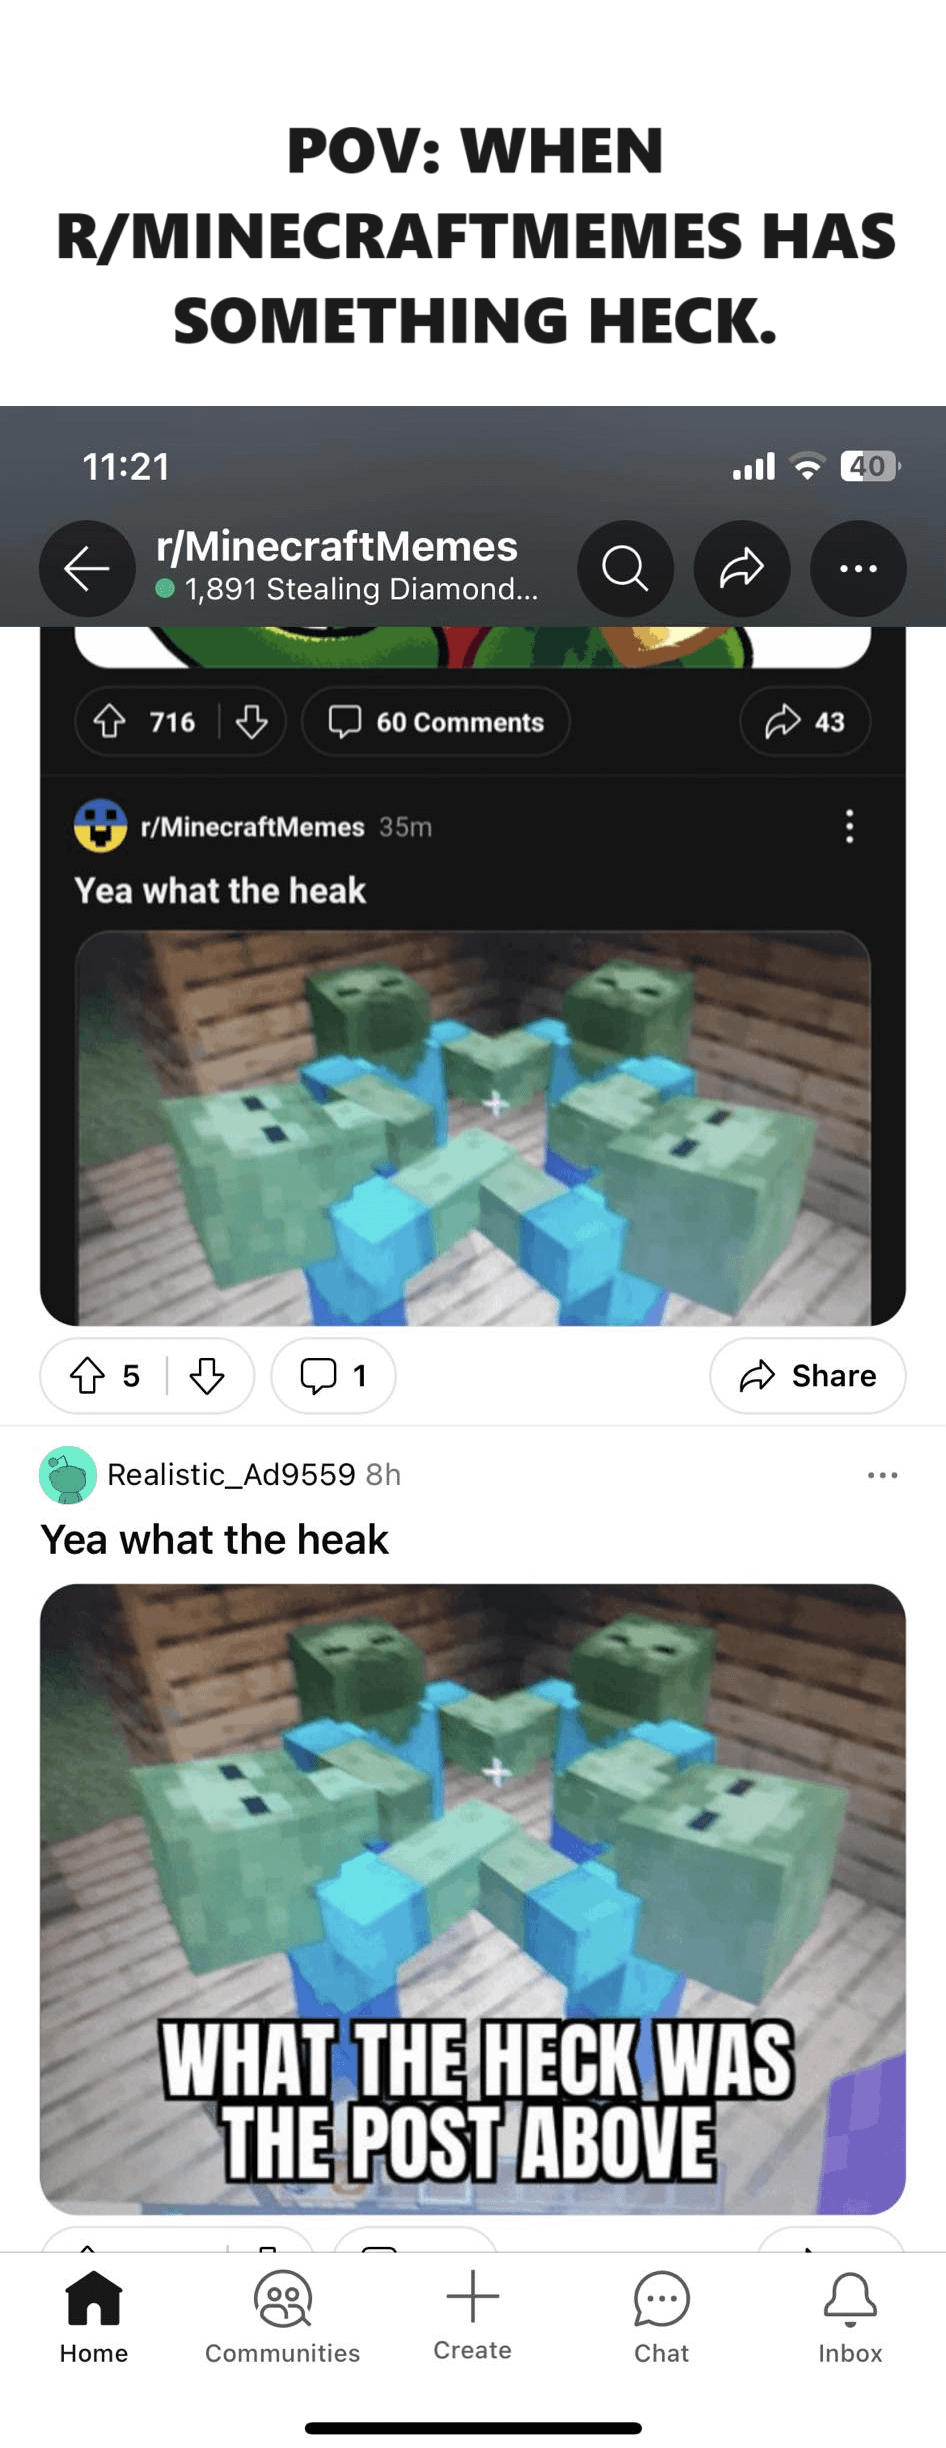 Minecraft Memes - "POV: When this has something wild."